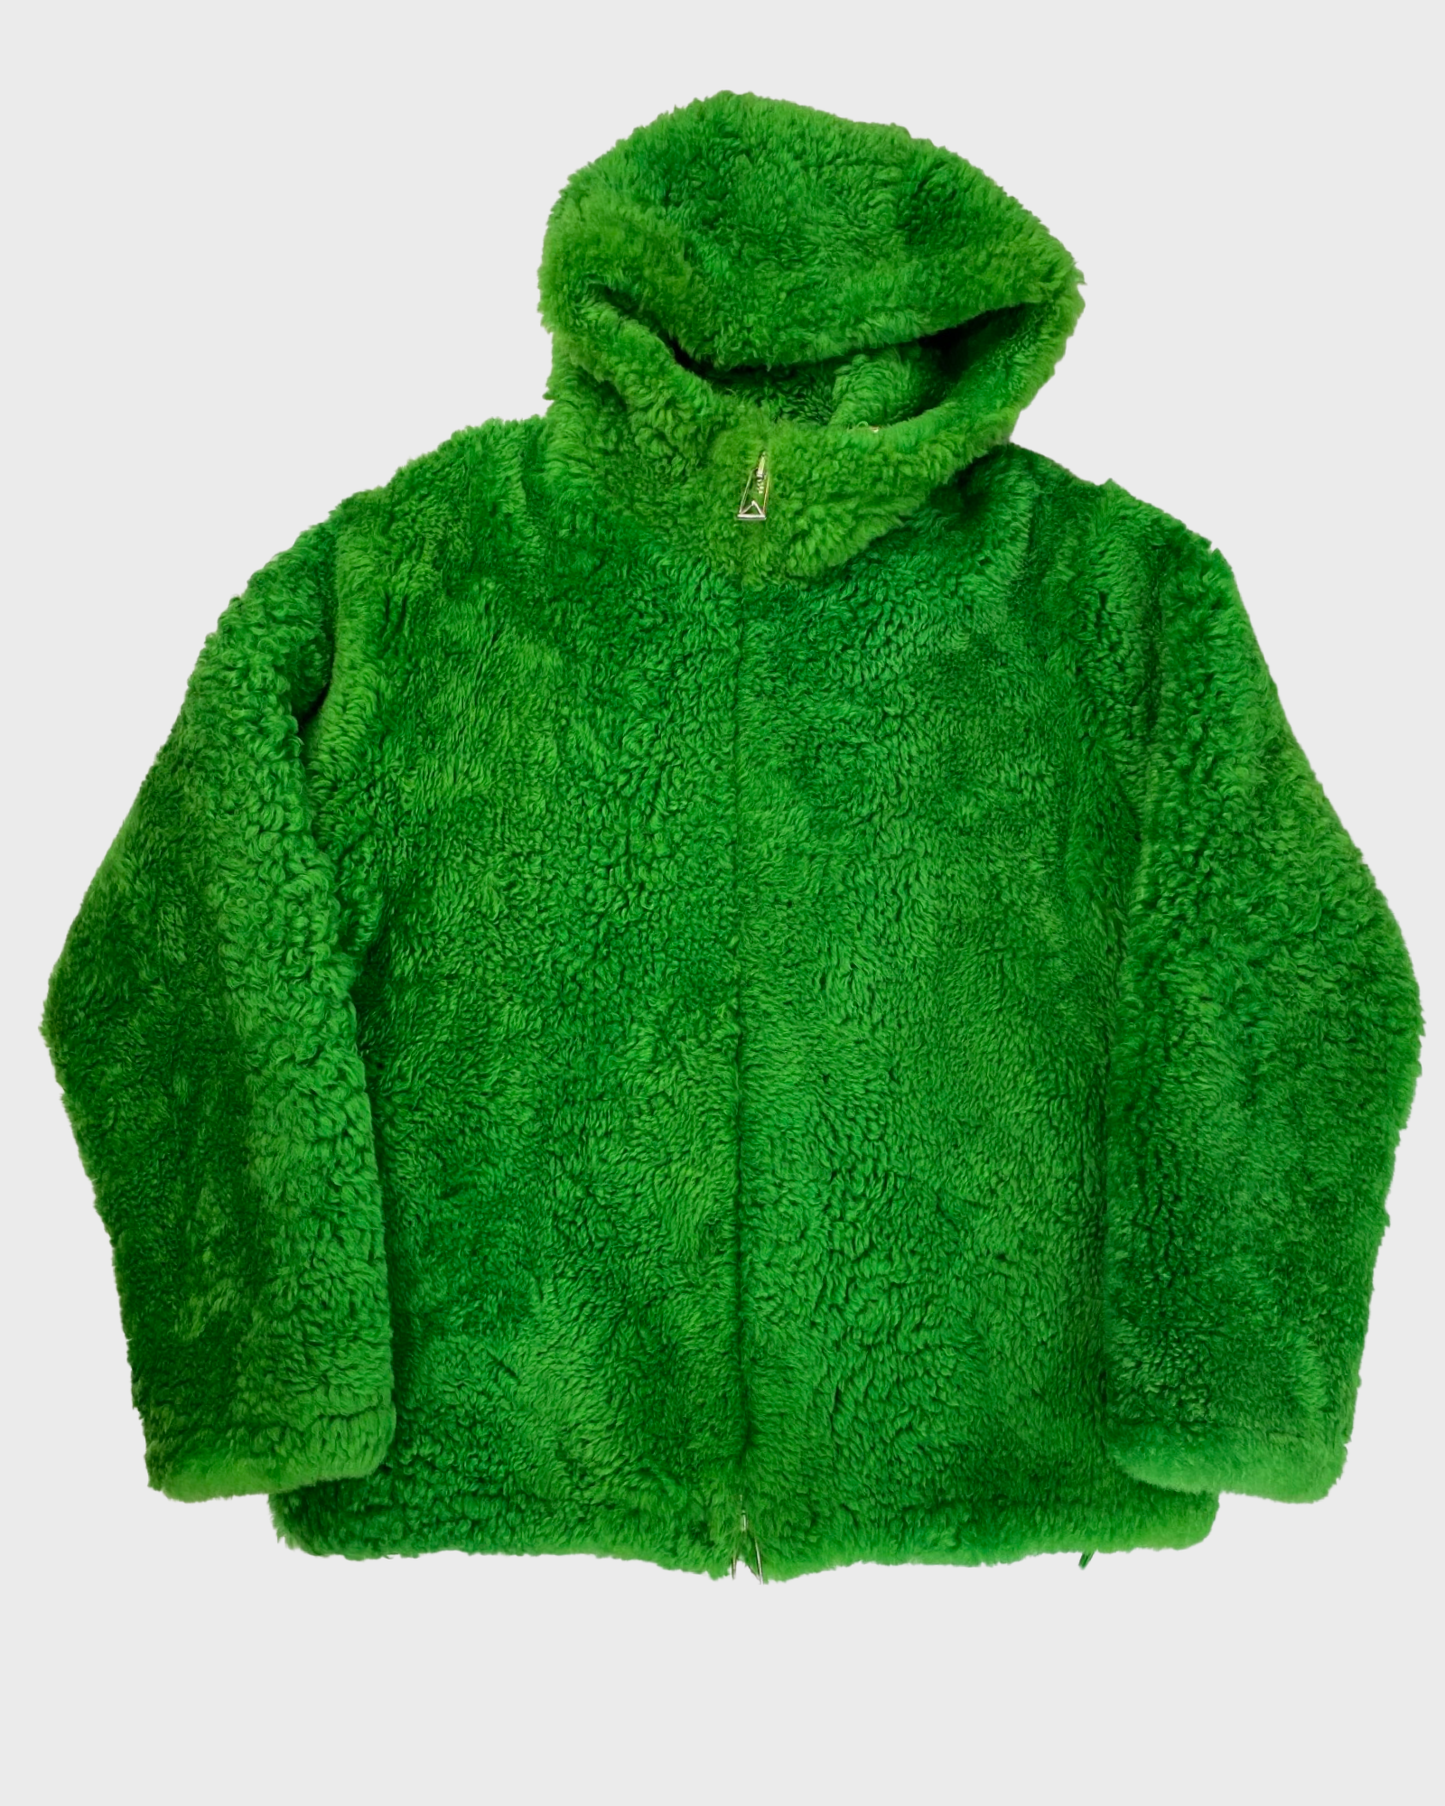 Bottega Veneta Daniel Lee lamb fur shearling green grinch jacket SZ:48